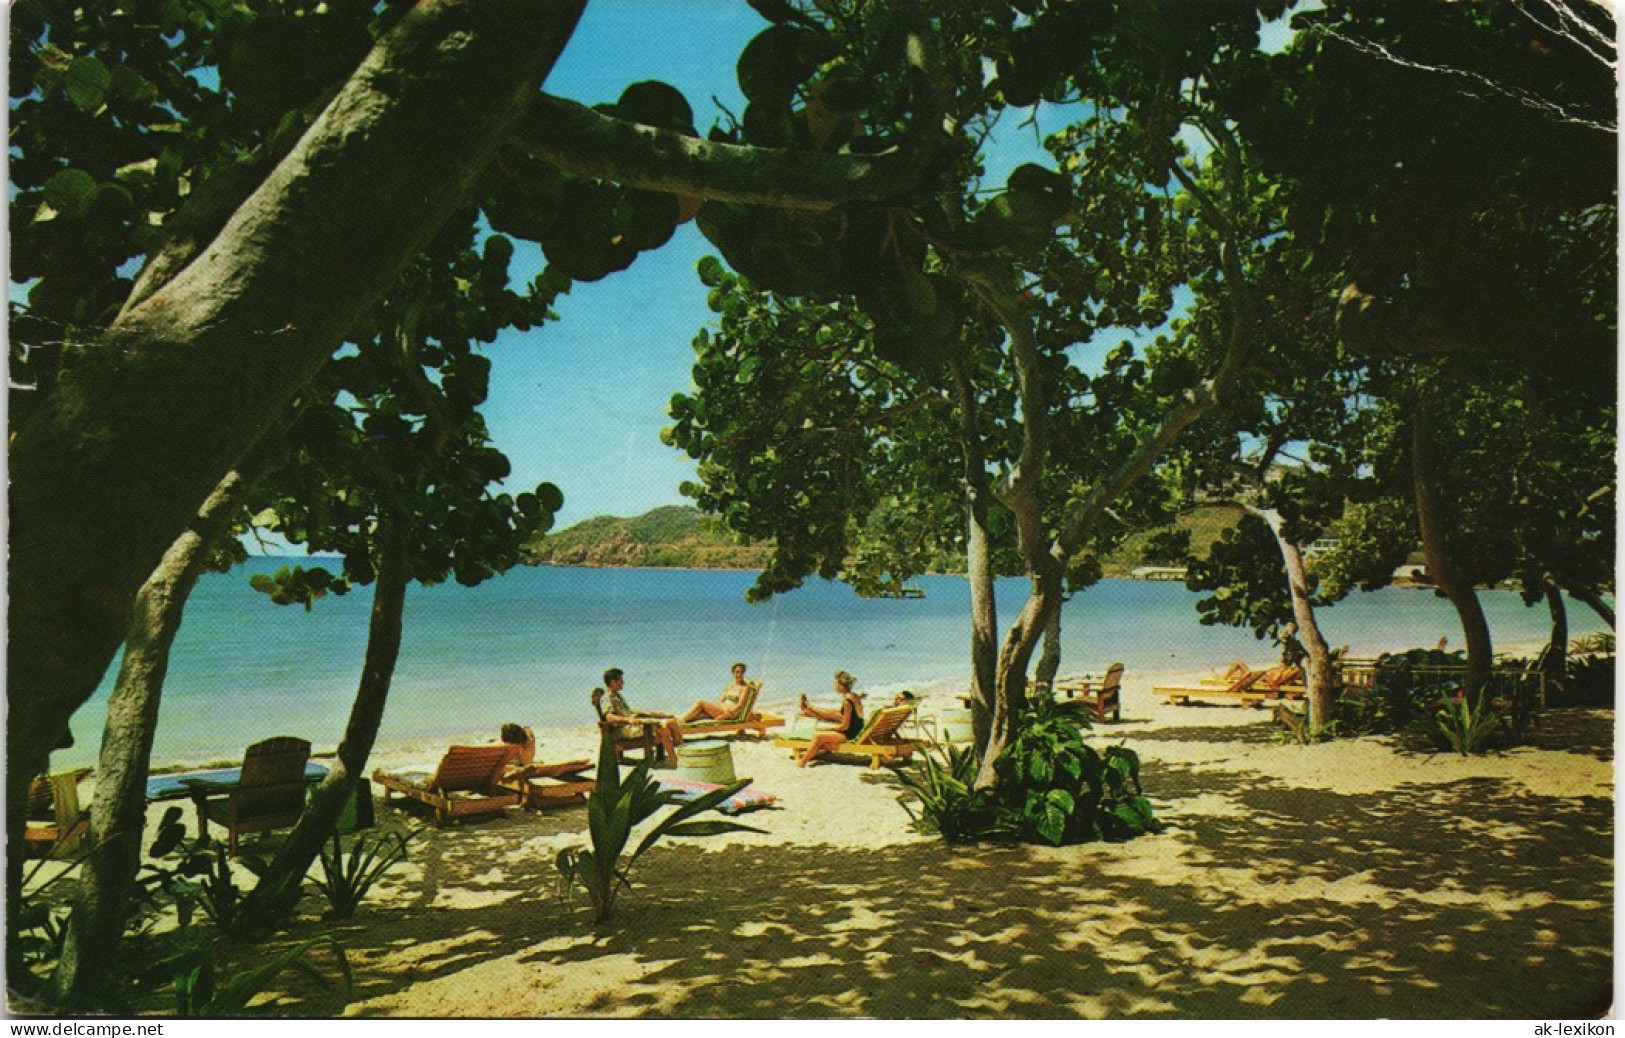 St. Thomas Sankt Thomas ISLAND BEACHCOMBER HOTEL Karibik Caribean Sea 1964 - Amerikaanse Maagdeneilanden